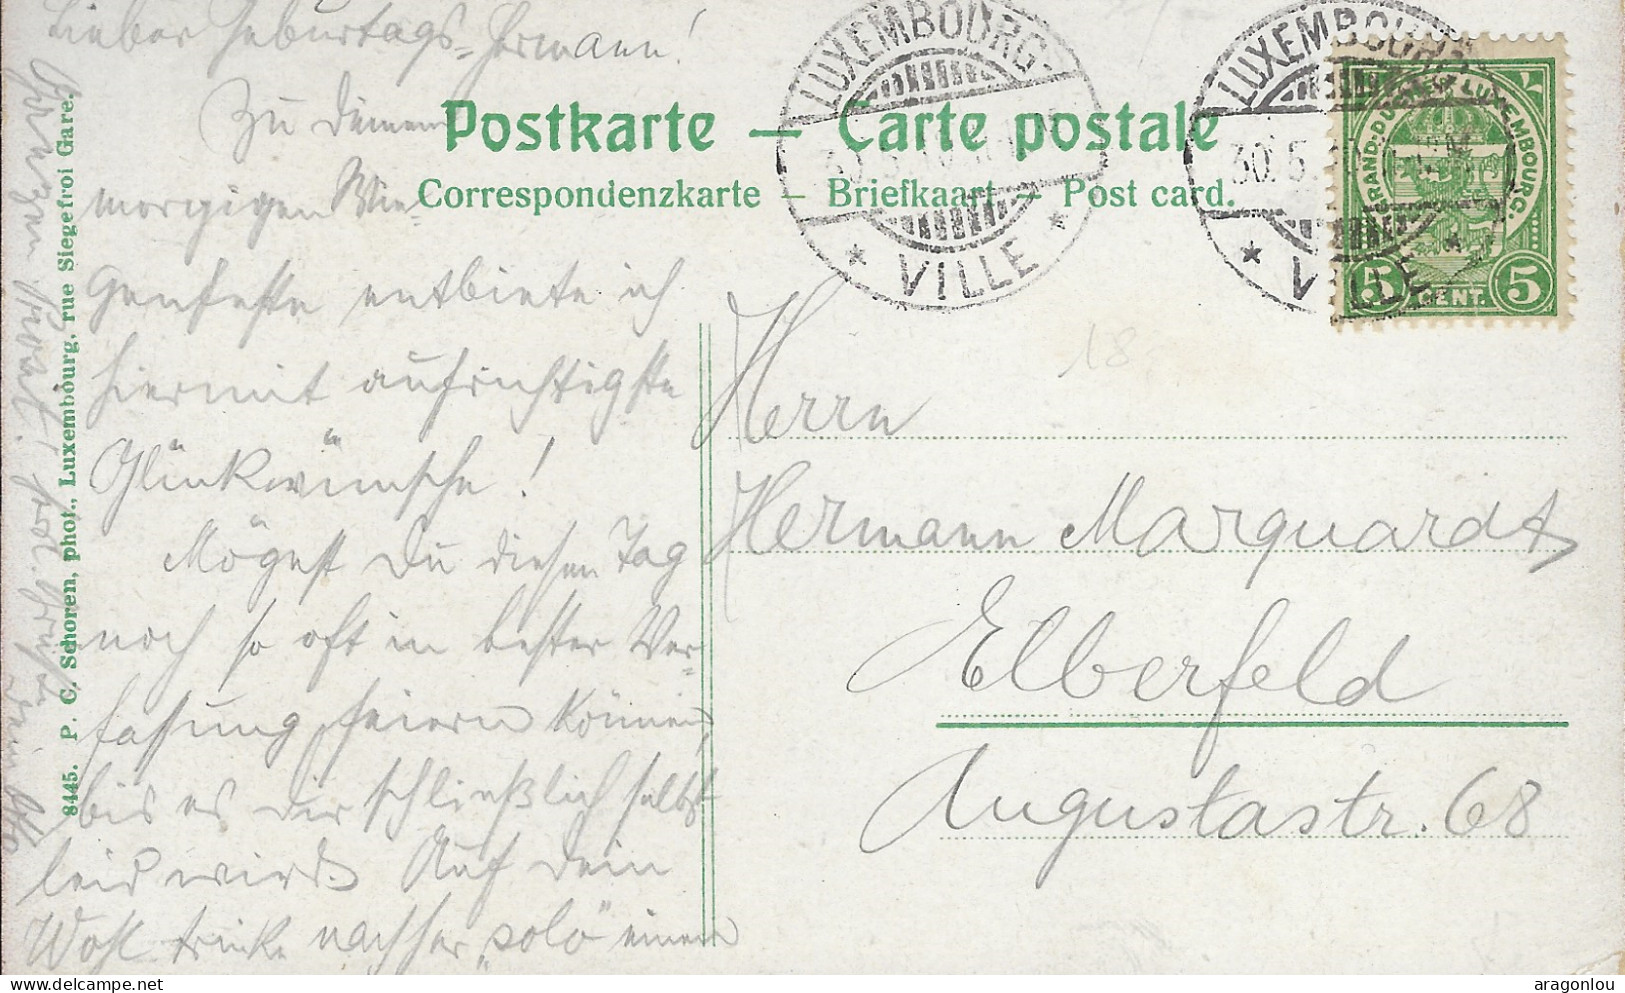 Luxembourg - Luxemburg  -   Mandat De Poste Internationale  De 1000Frs   1912  -  Carte Taxe - Luxembourg